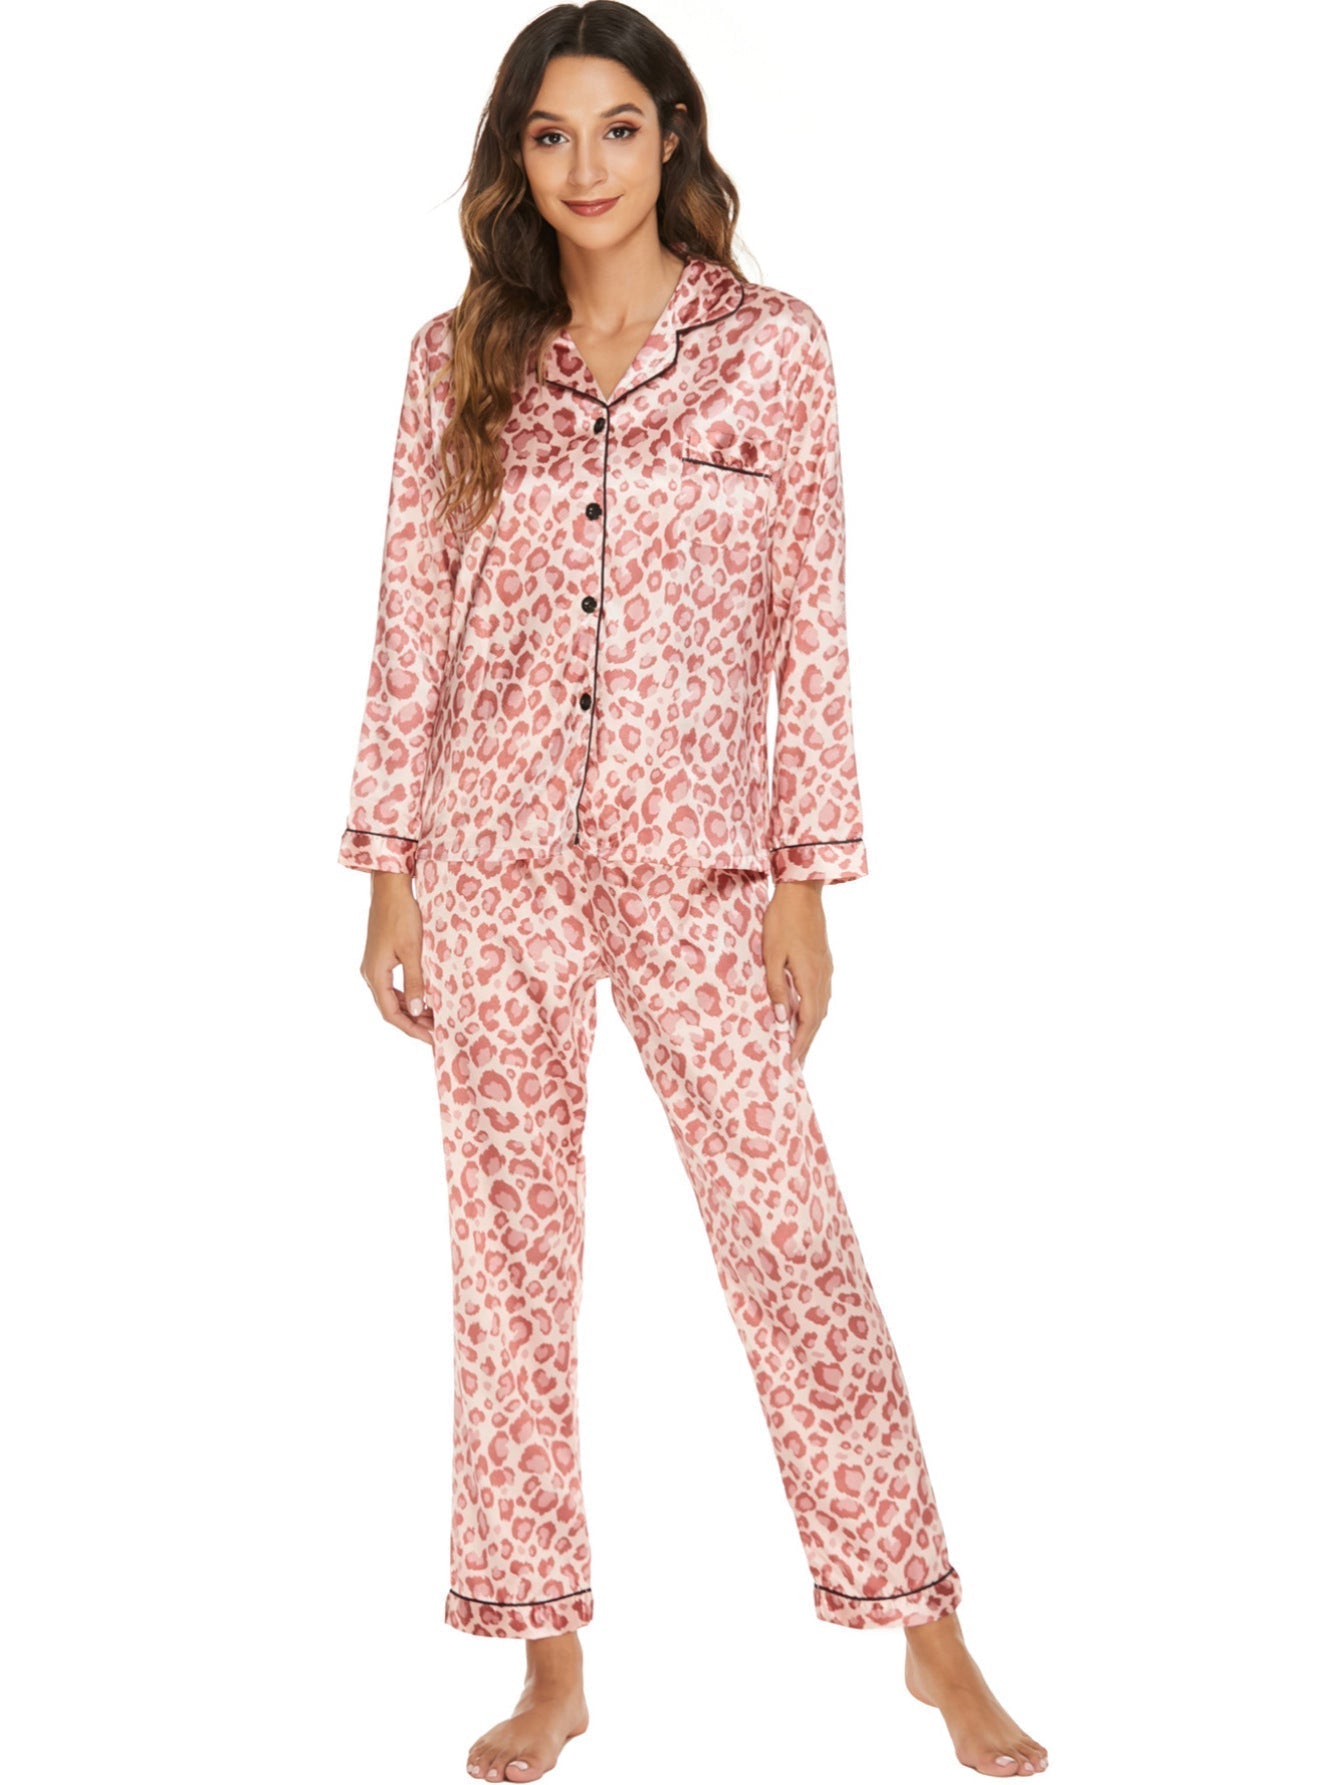 Home Wear Suit Pajamas Women Satin Cardigan Long Sleeve Long Sleeve Autumn